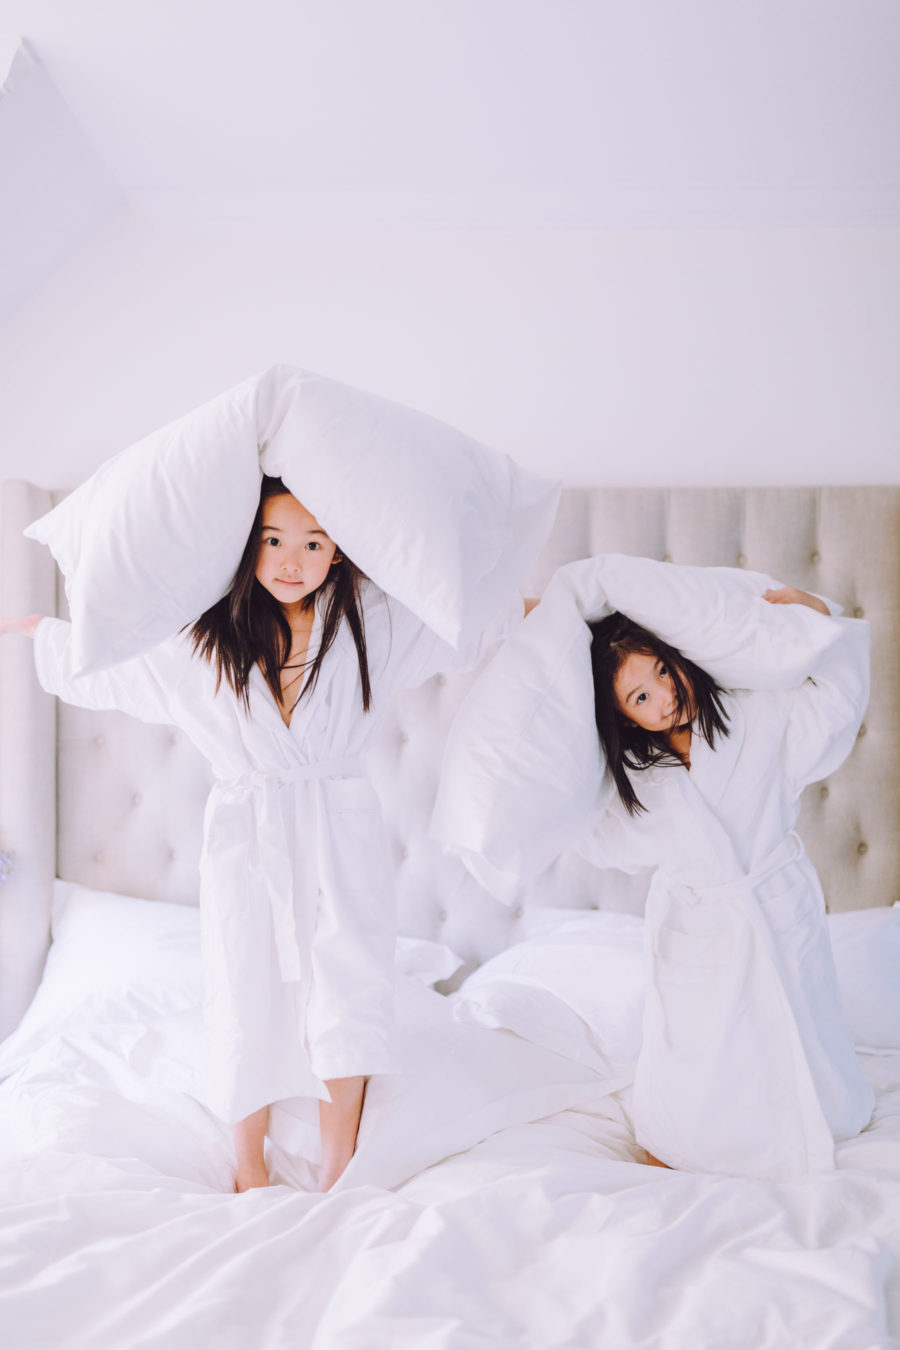 fashion blogger jessica wang shares best winter skincare brands for kids // Notjessfashion.com